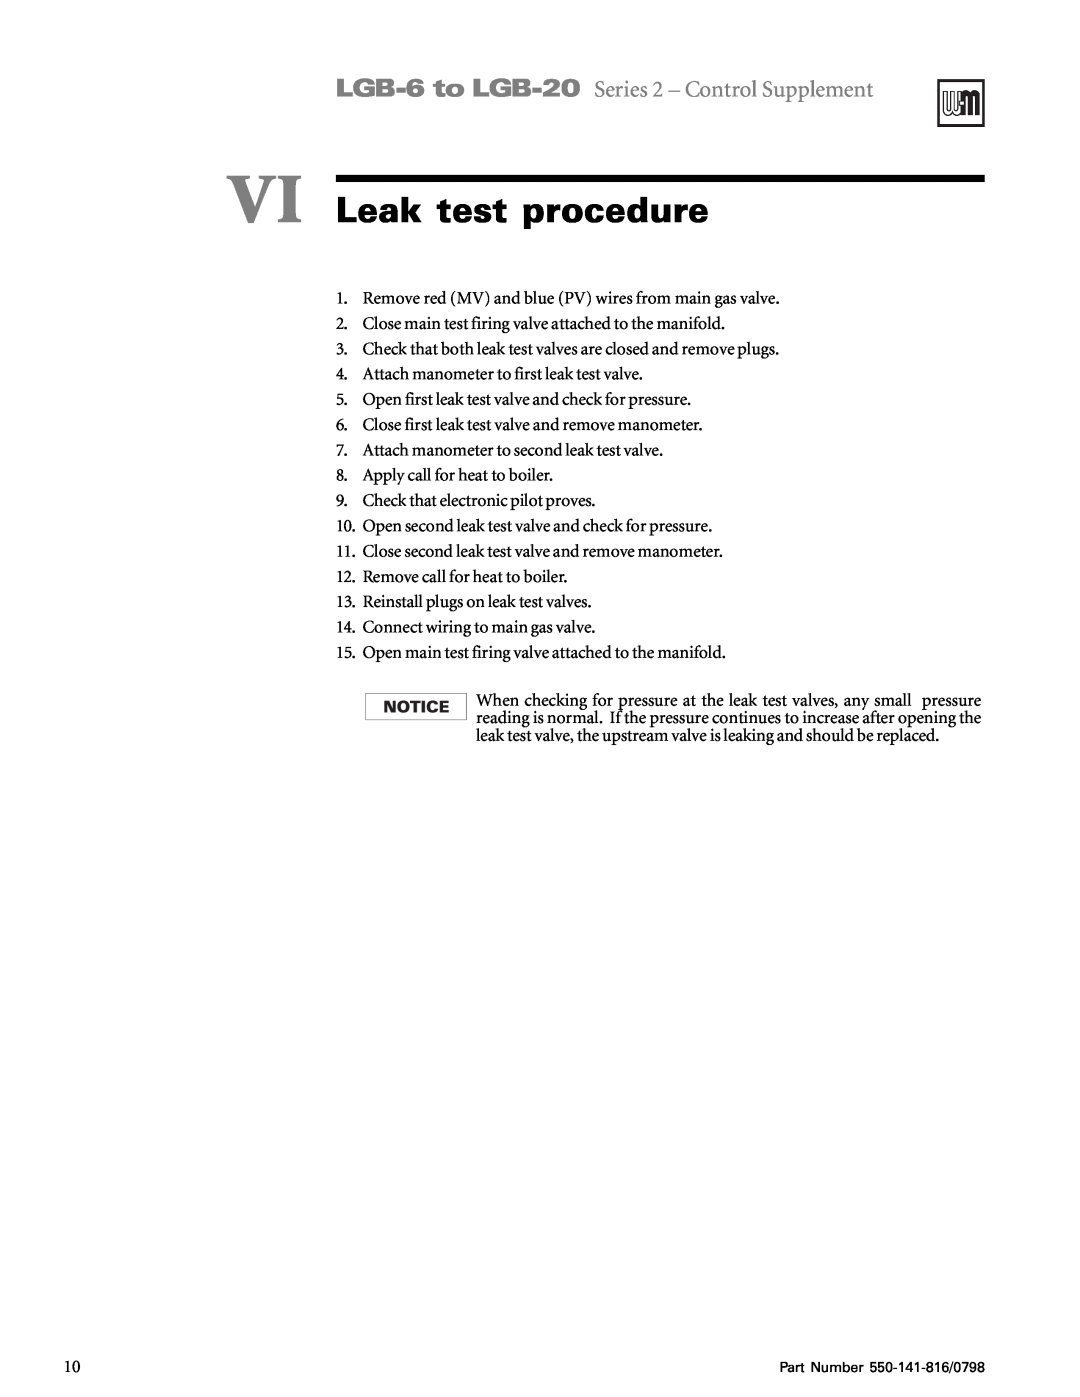 Weil-McLain 6-20 Series operating instructions VI Leak test procedure, LGB-6to LGB-20 Series 2 - Control Supplement 